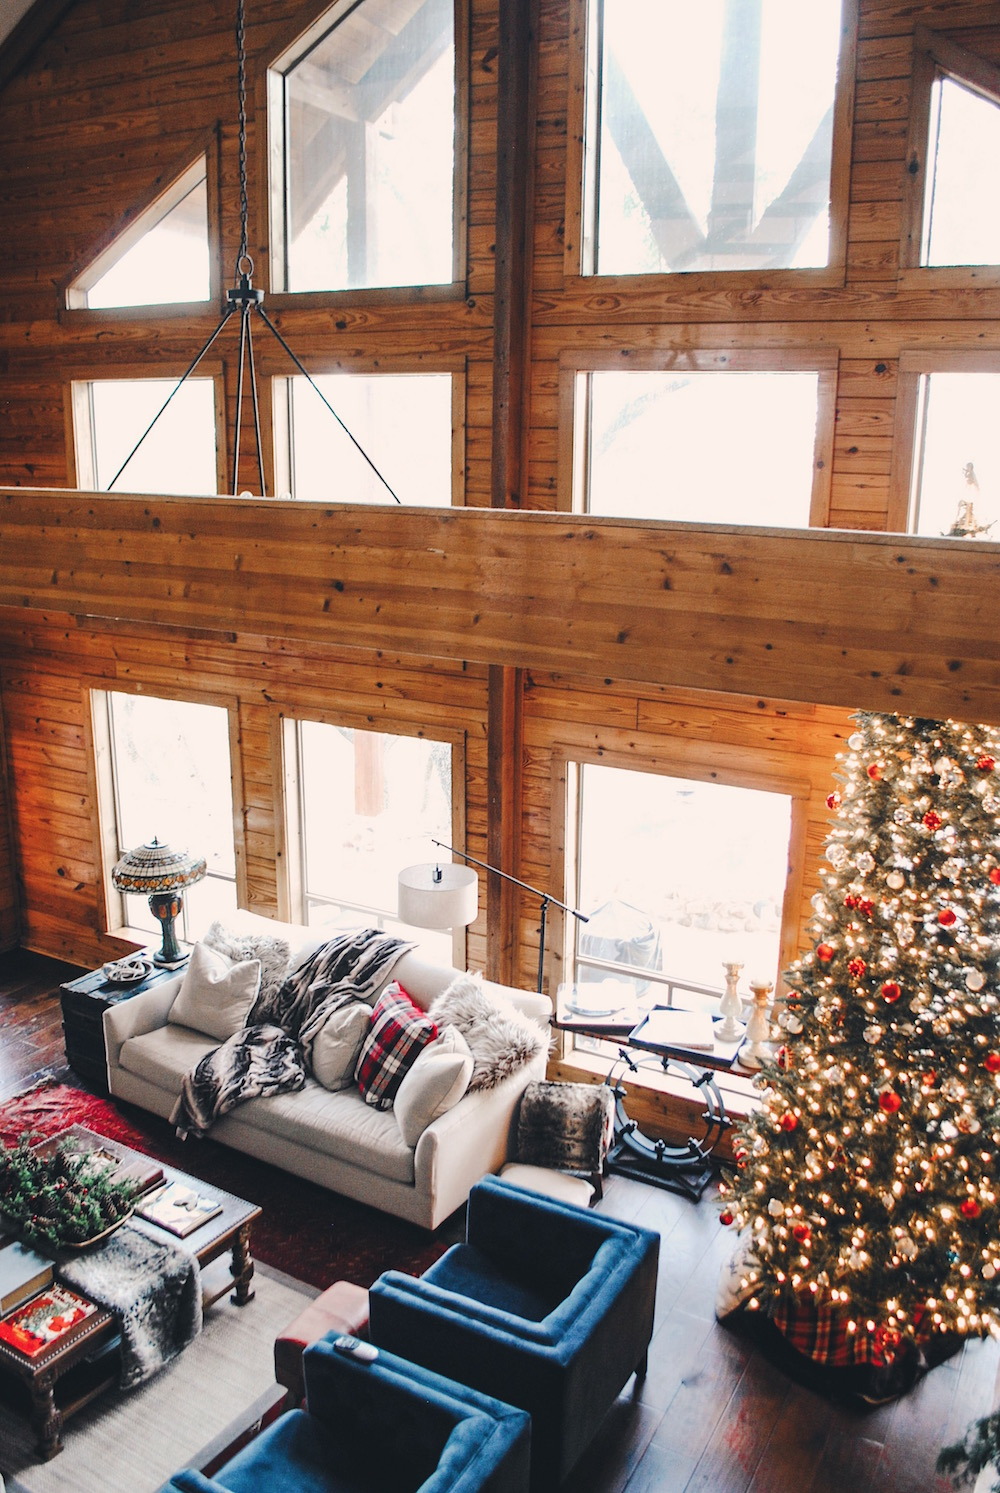 Spectacular Christmas cabin in Texas